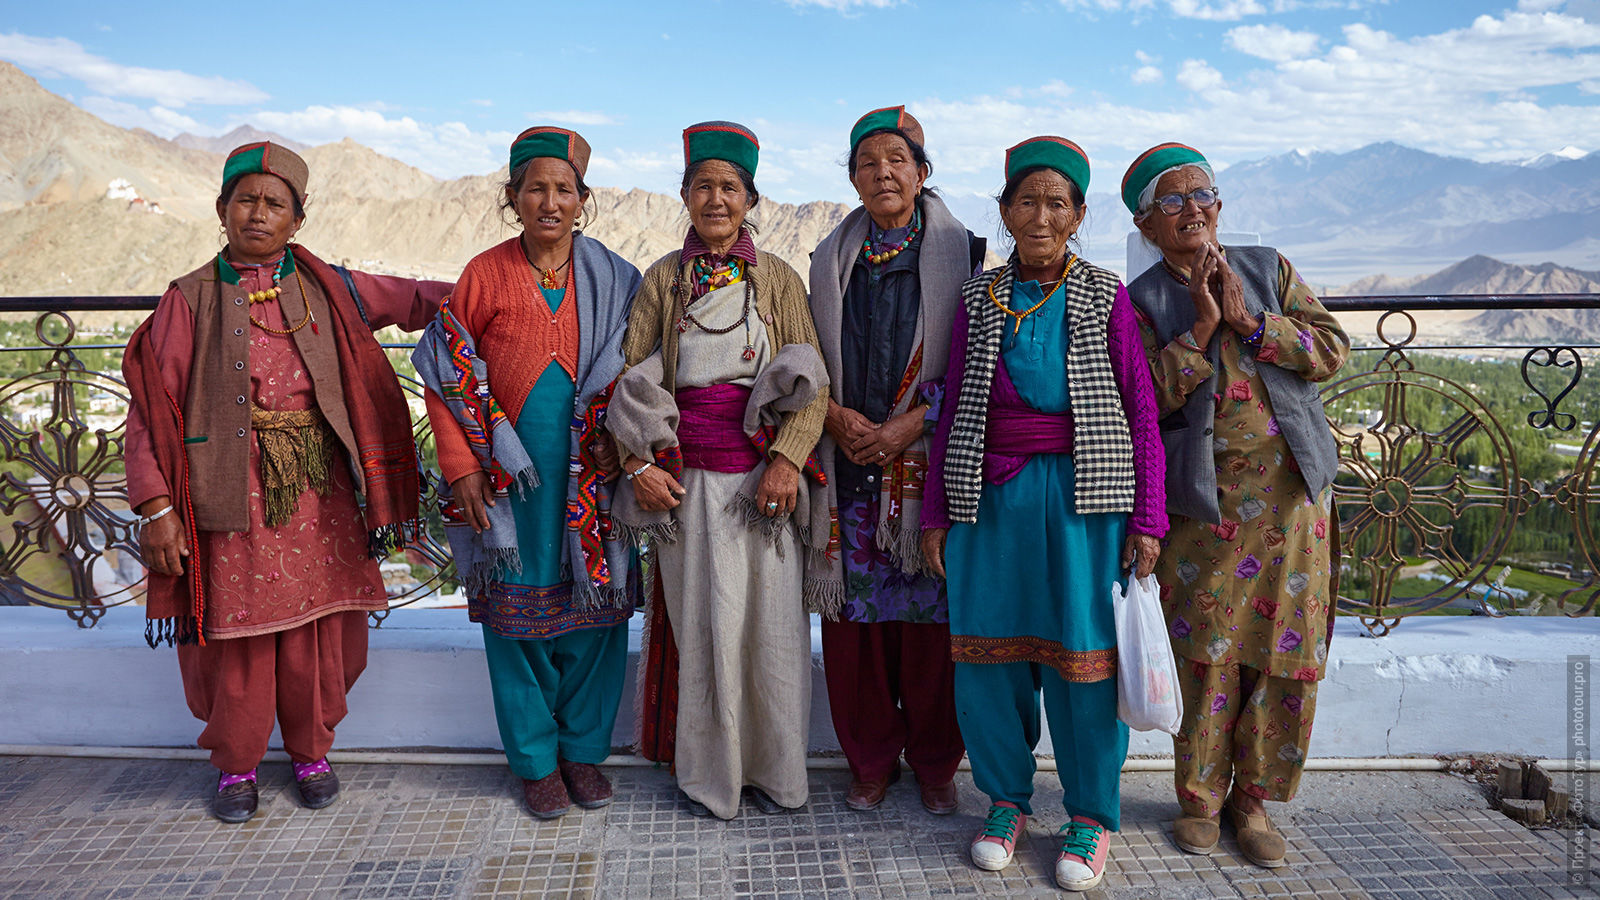 Ладакхские женщины, монастырь Петуб Гонпа, Лех, фототур по Ладакху, август 2015 года.